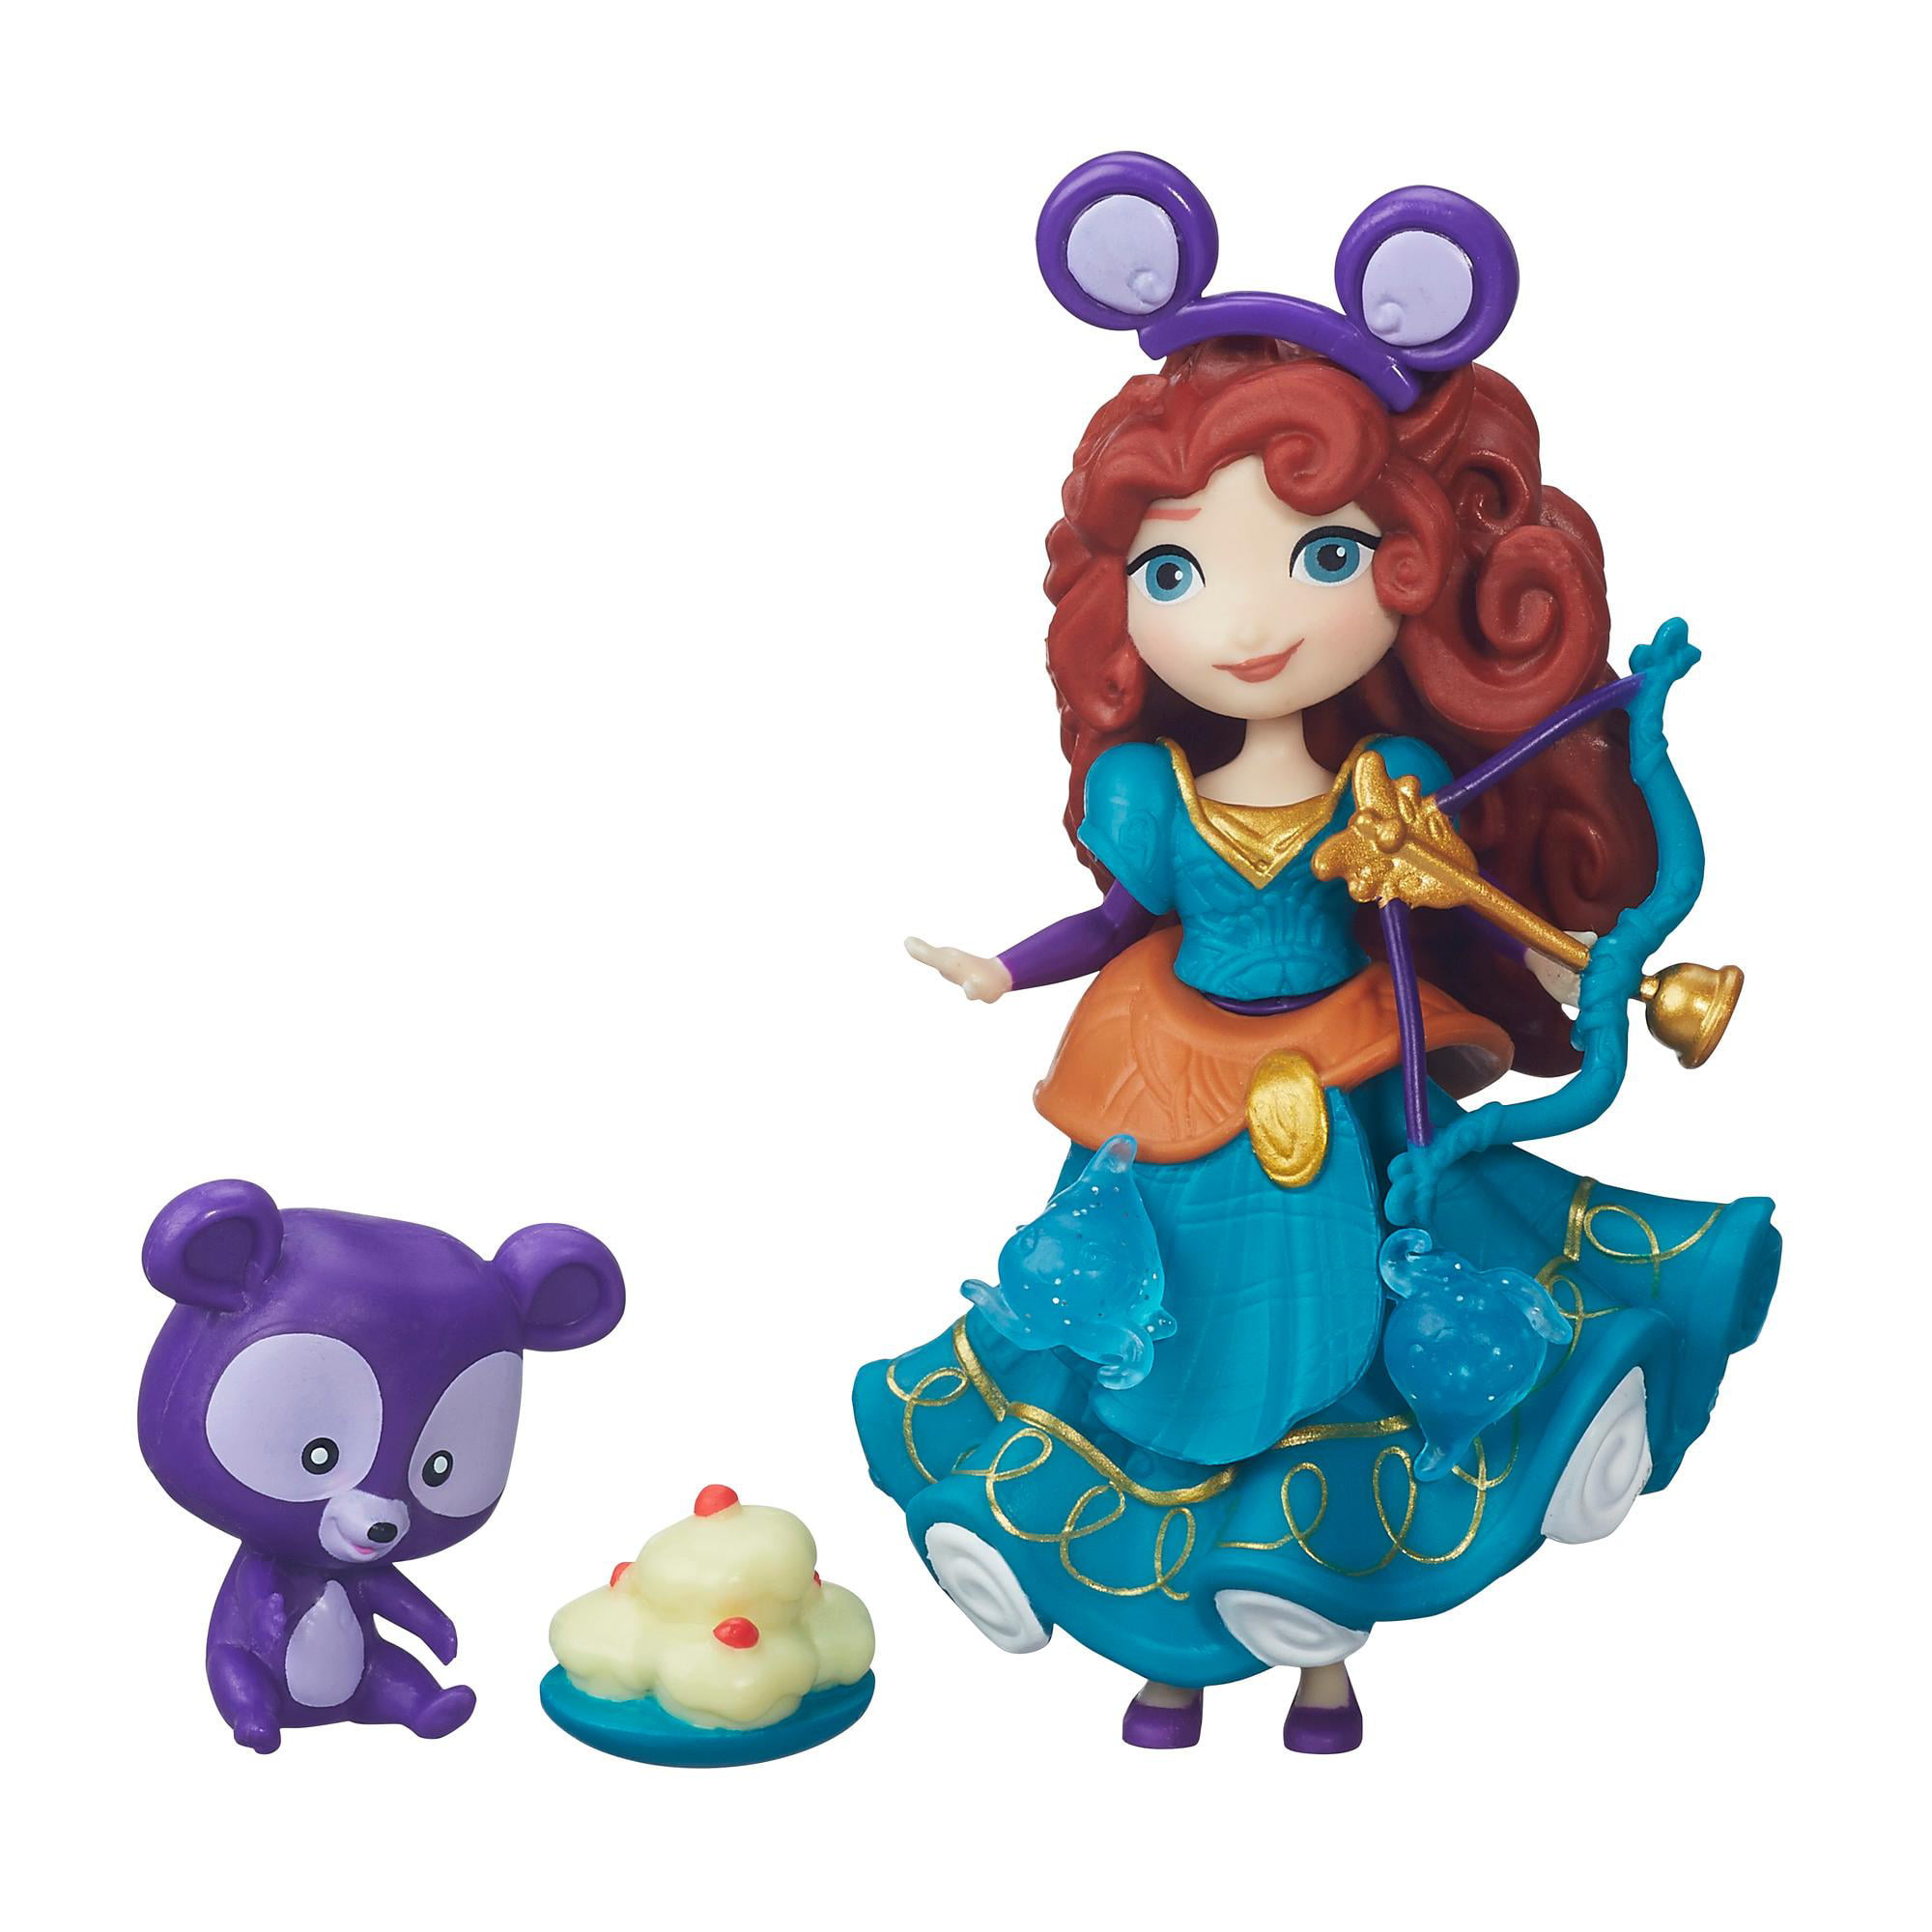 Disney Princess Little Kingdom Merida's Playful Adventures